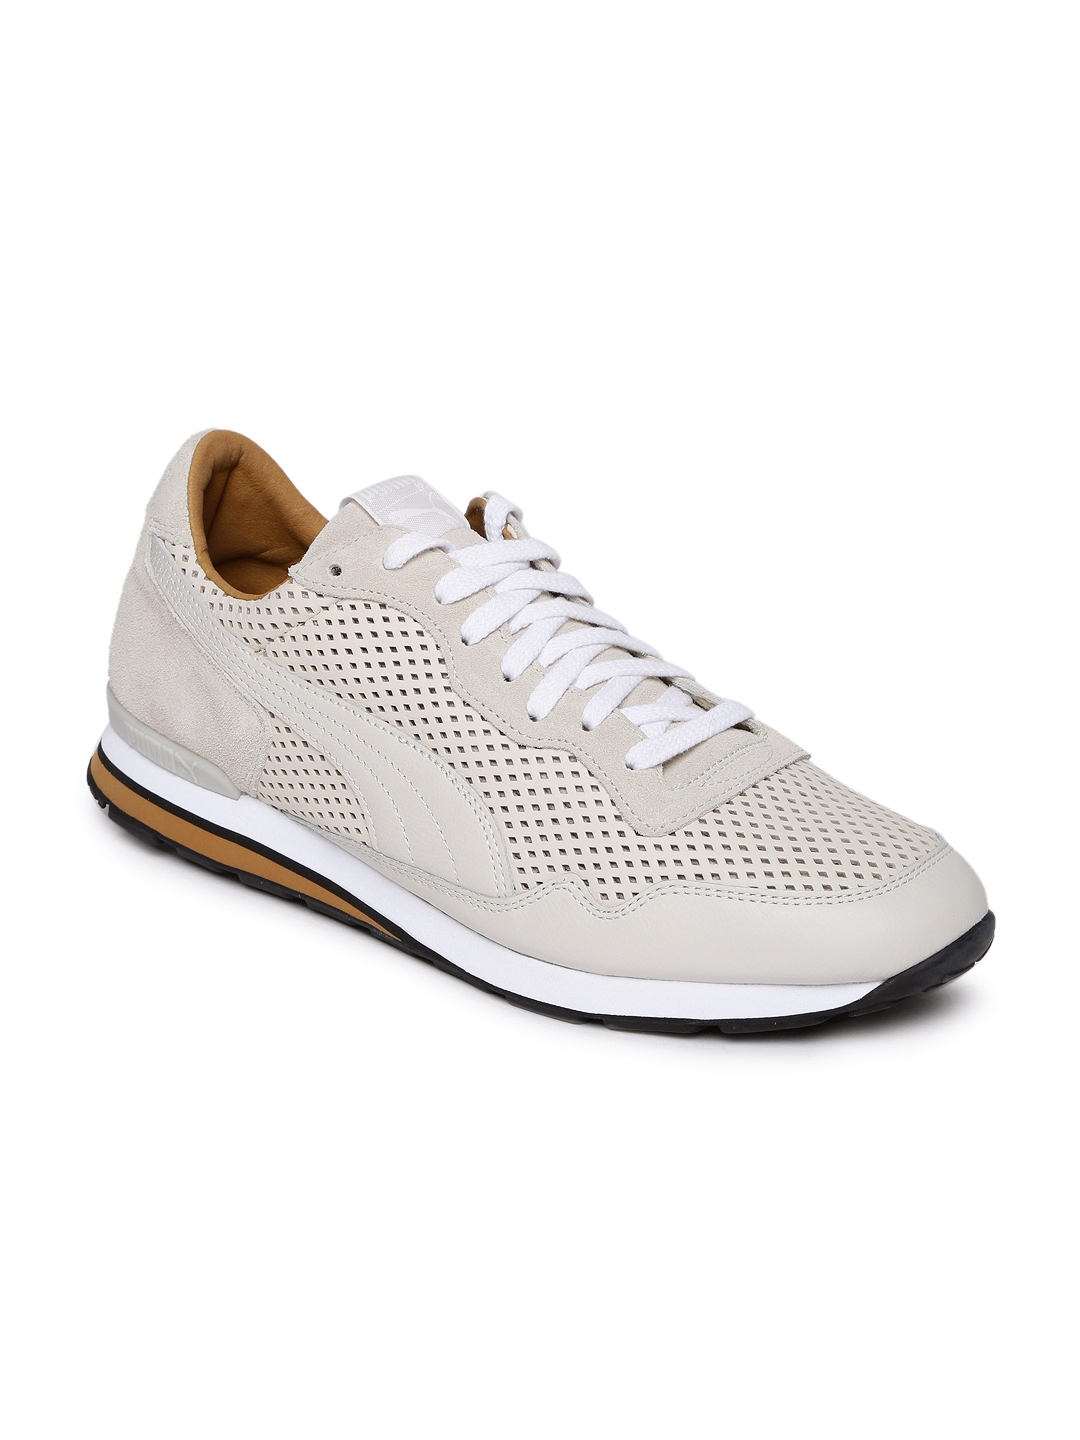 Buy Puma Men Beige Suede Sneakers - Casual Shoes for Men 2253117 | Myntra